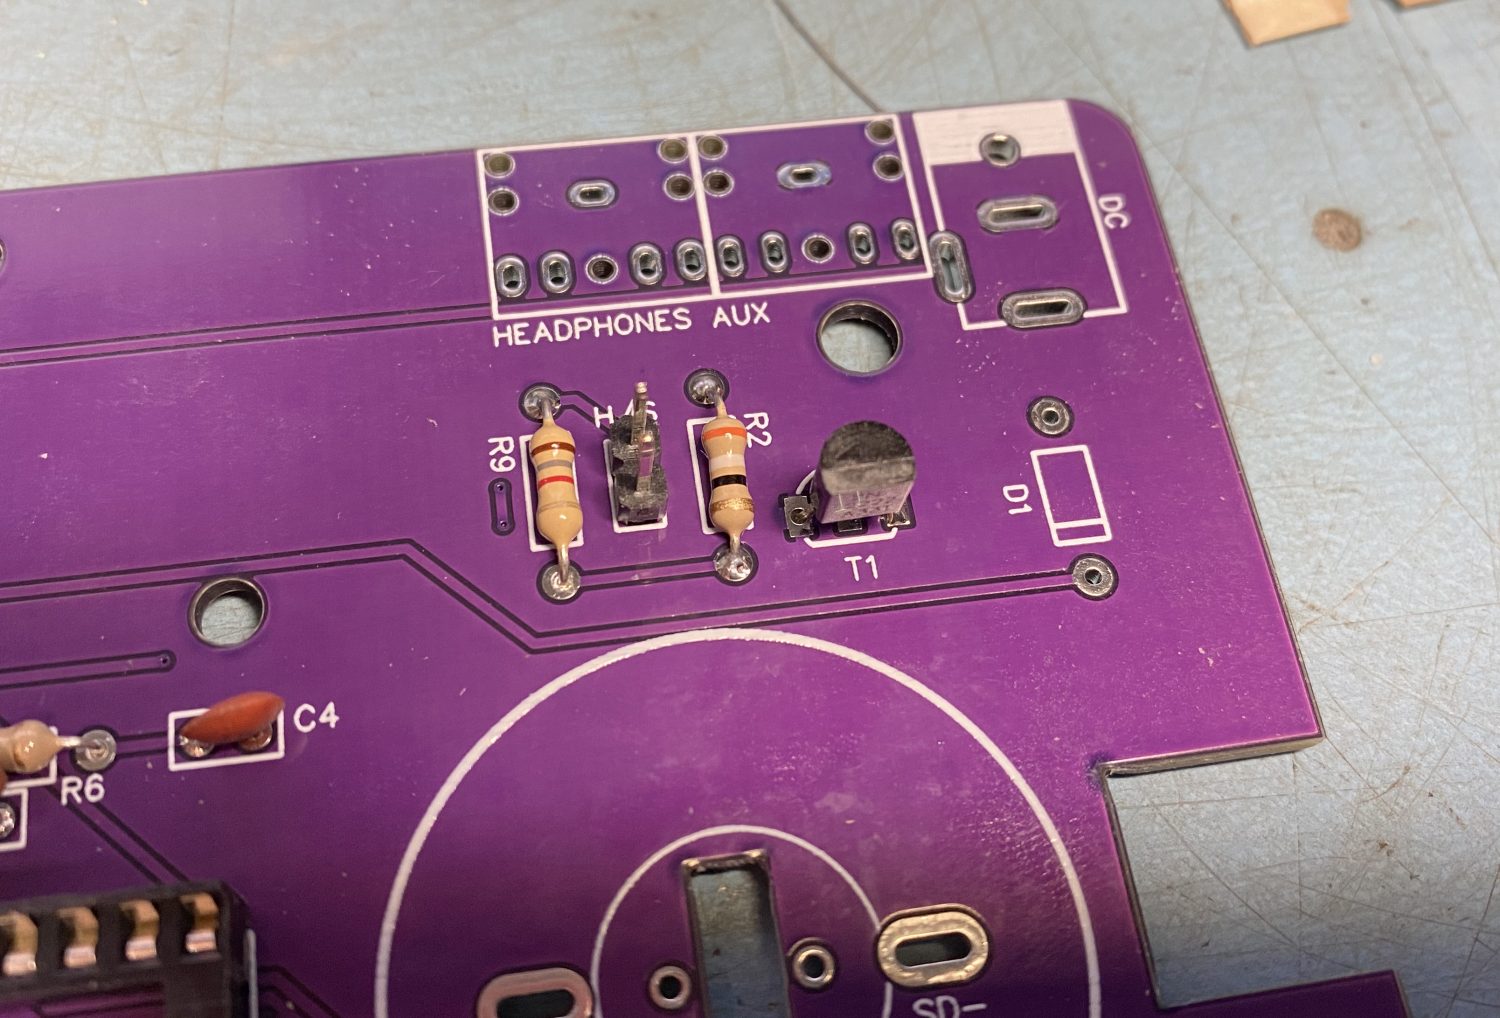 T1 (2N2222) Transistor installed.